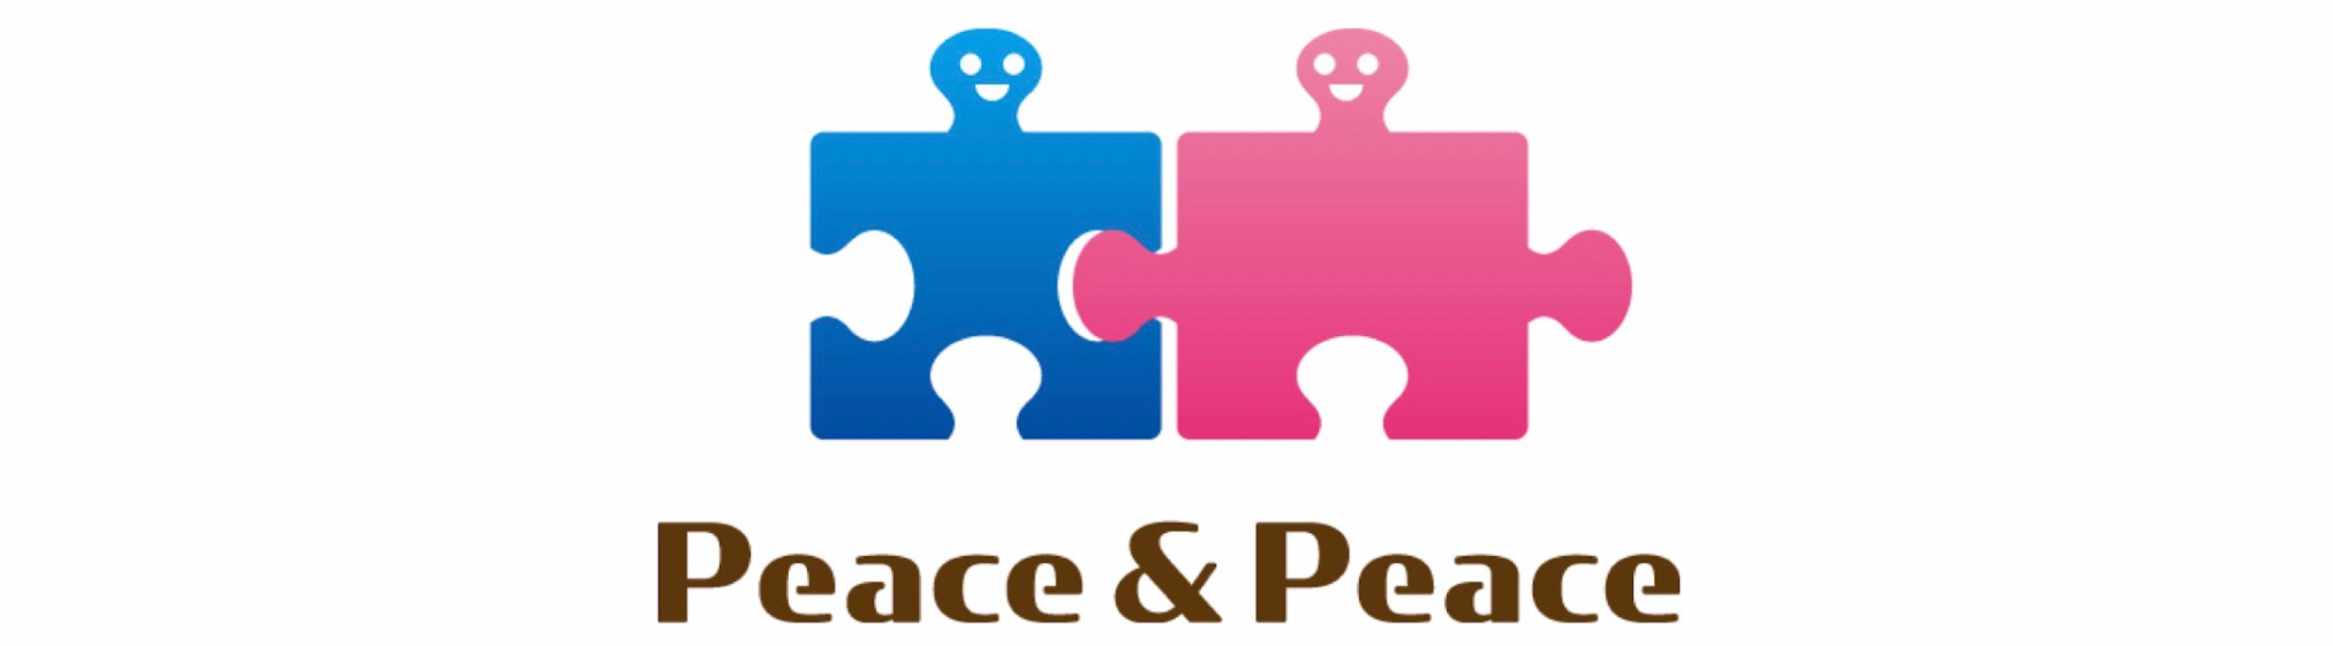 peace&peace